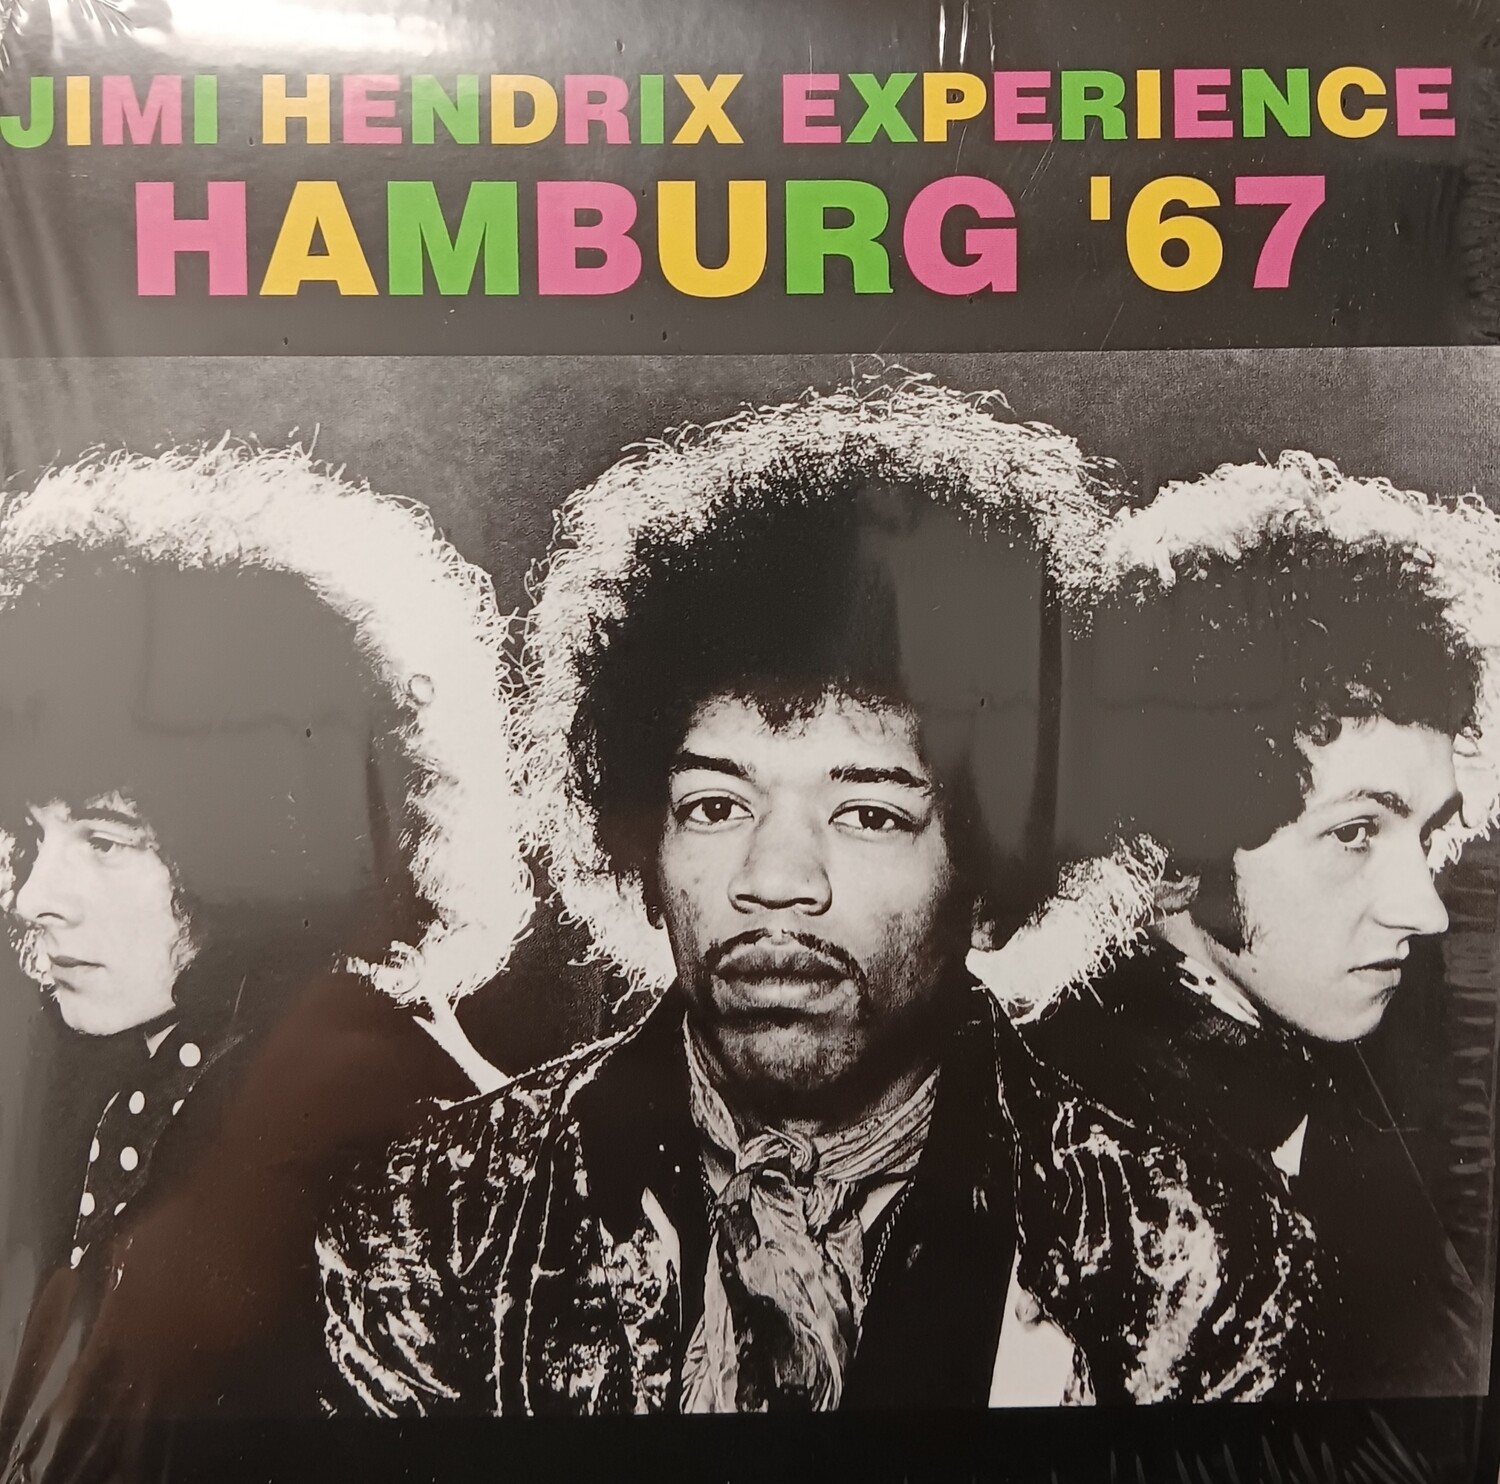 JIMI HENDRIX EXPERIENCE - Hamburg '67 (7" - 33RPM)